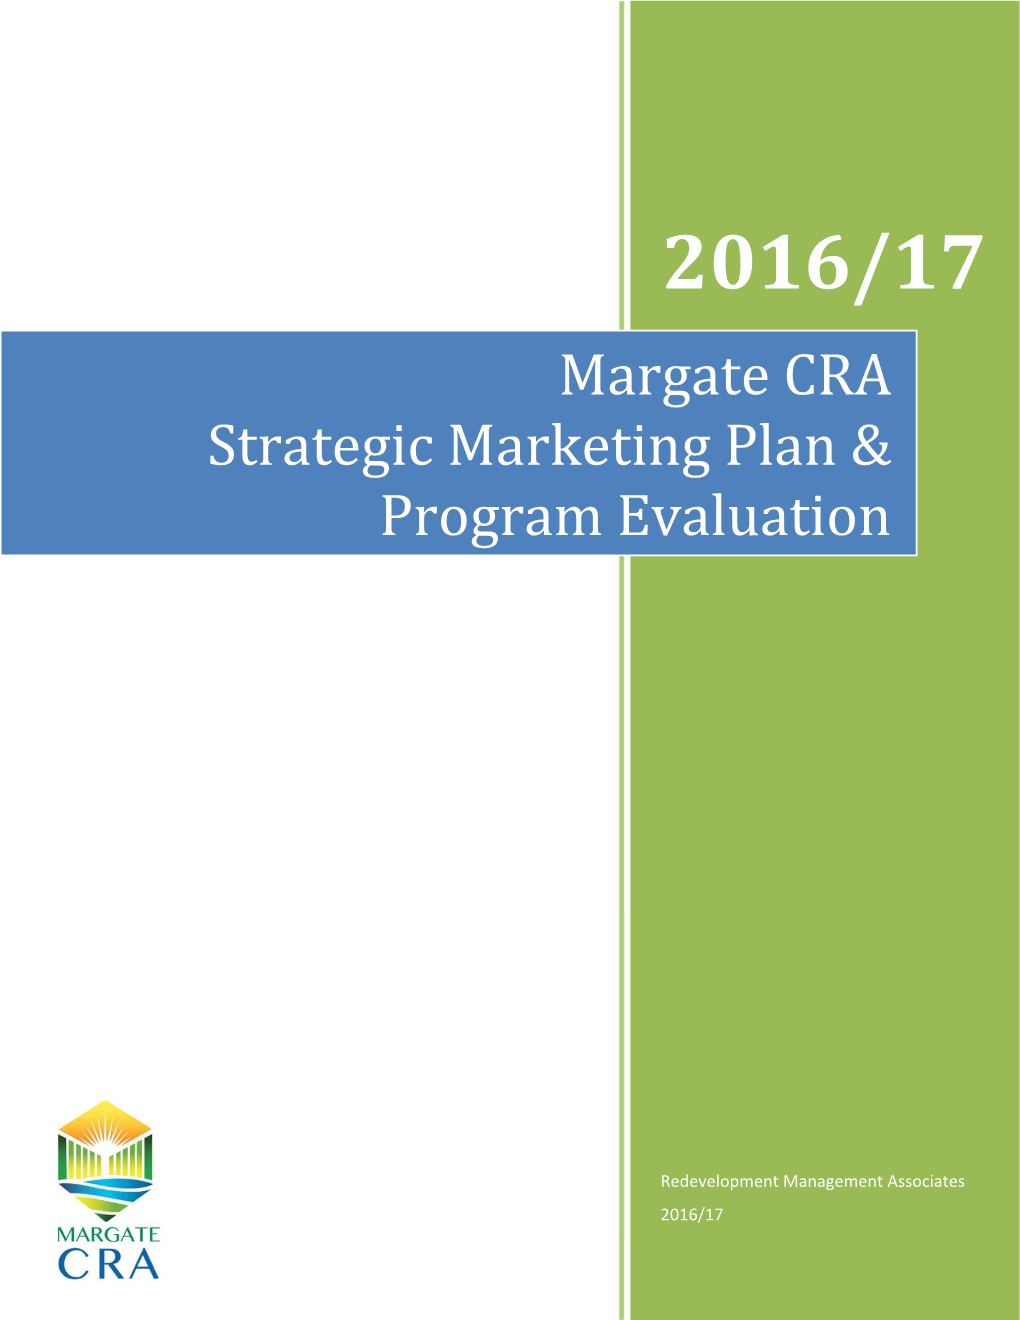 Margate CRA Strategic Marketing Plan & Program Evaluation